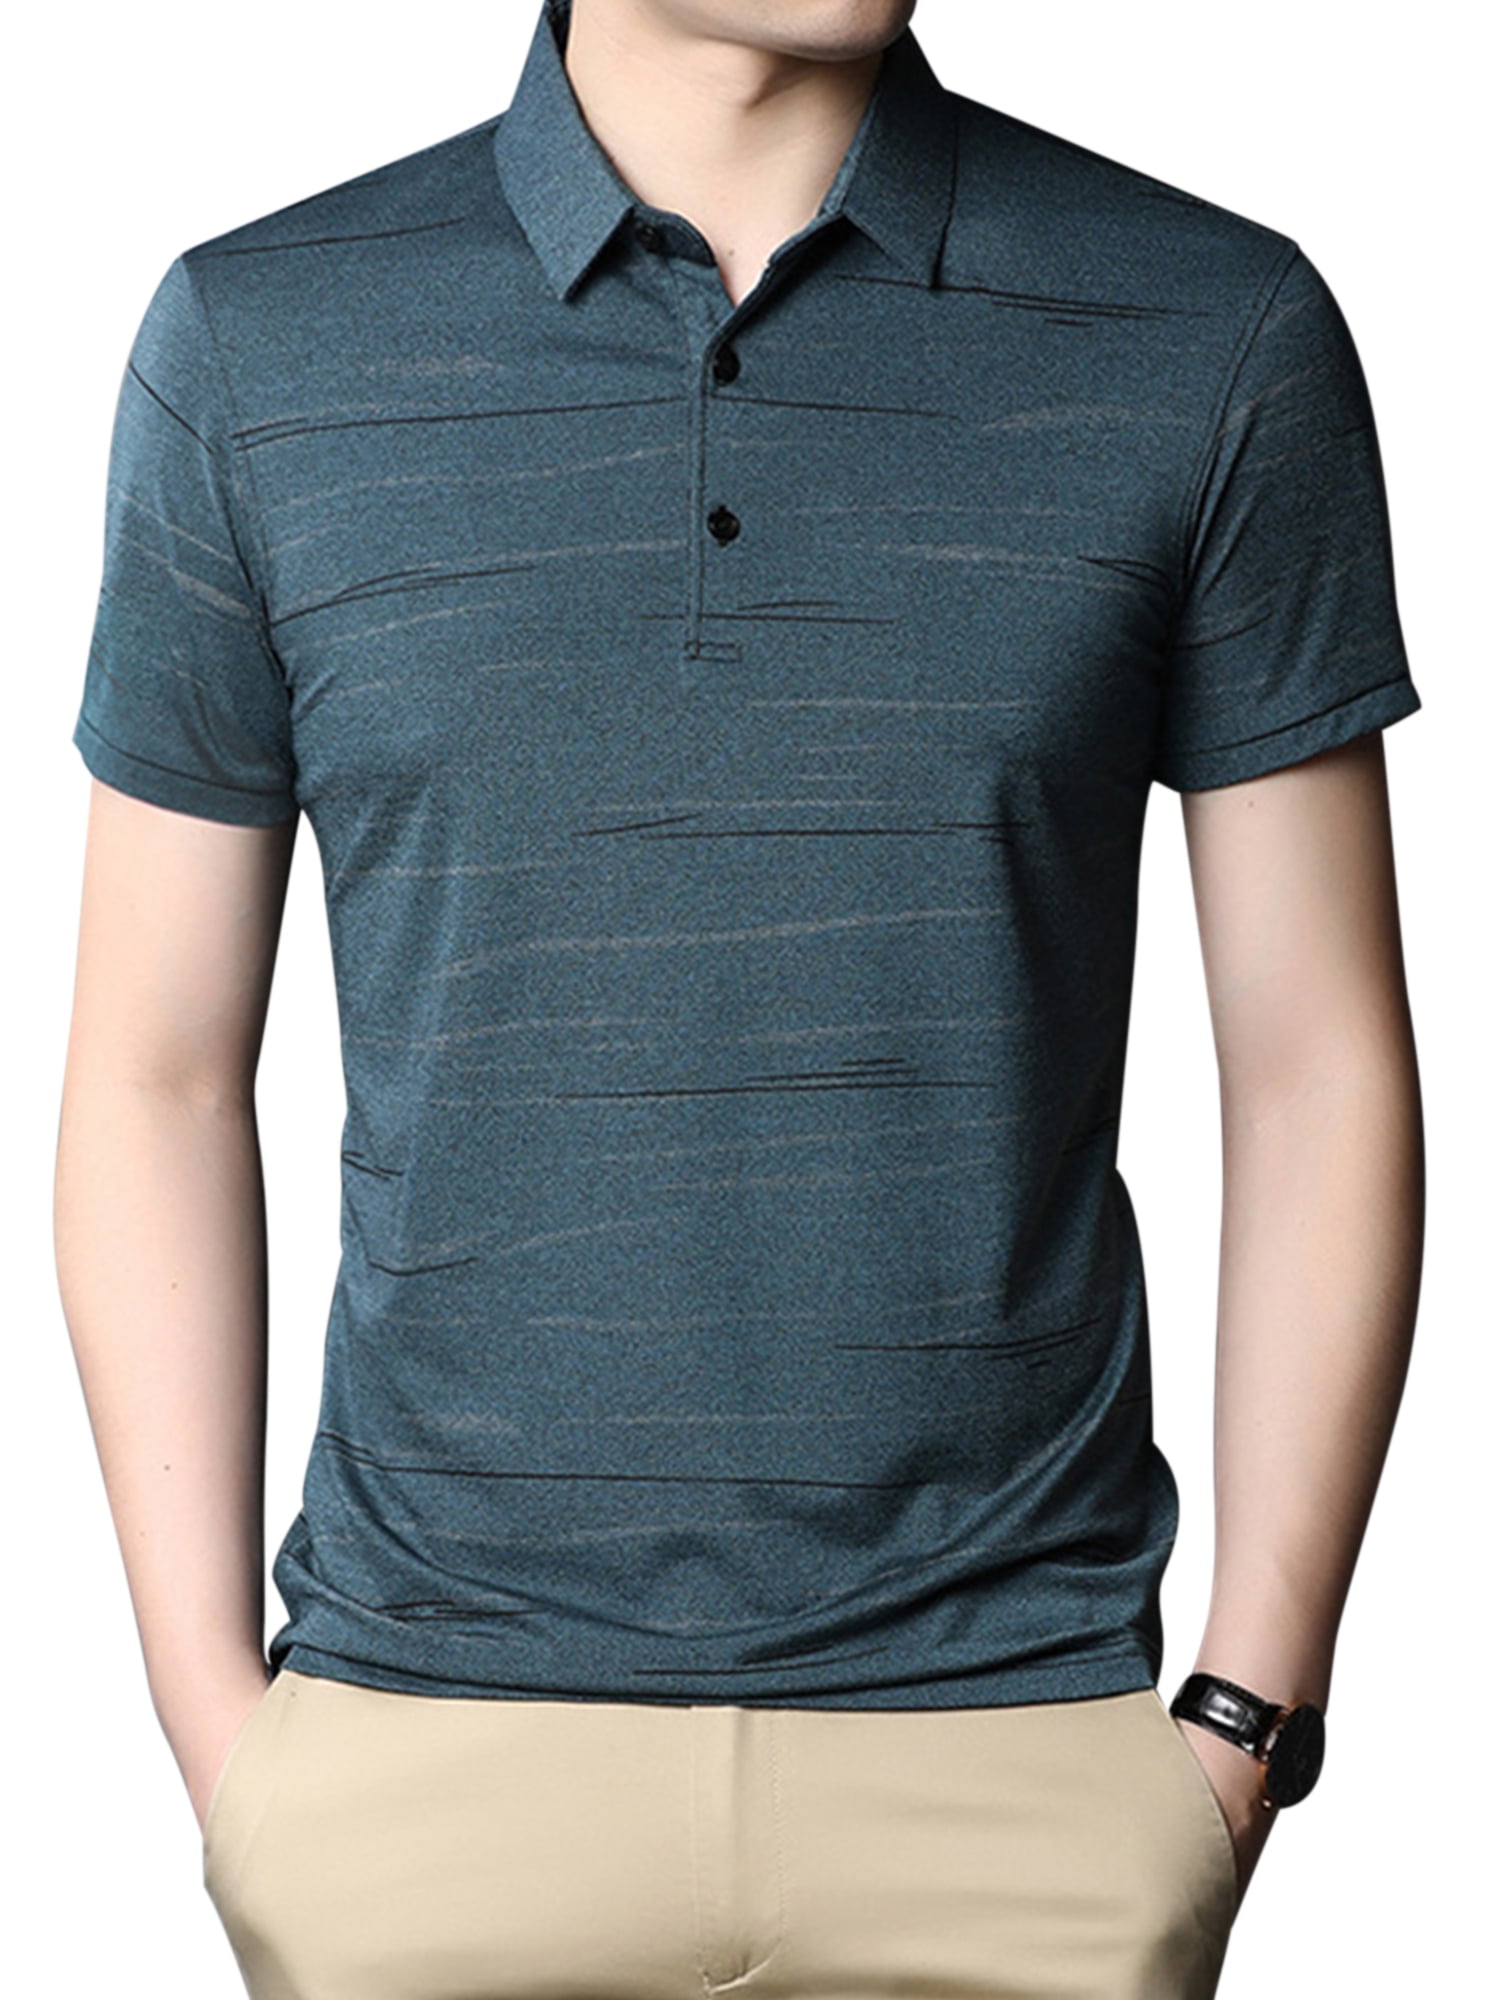 Mens Boys Plain Pique Polo Shirt Short Sleeves Top Men's Casual Regular T-Shirt